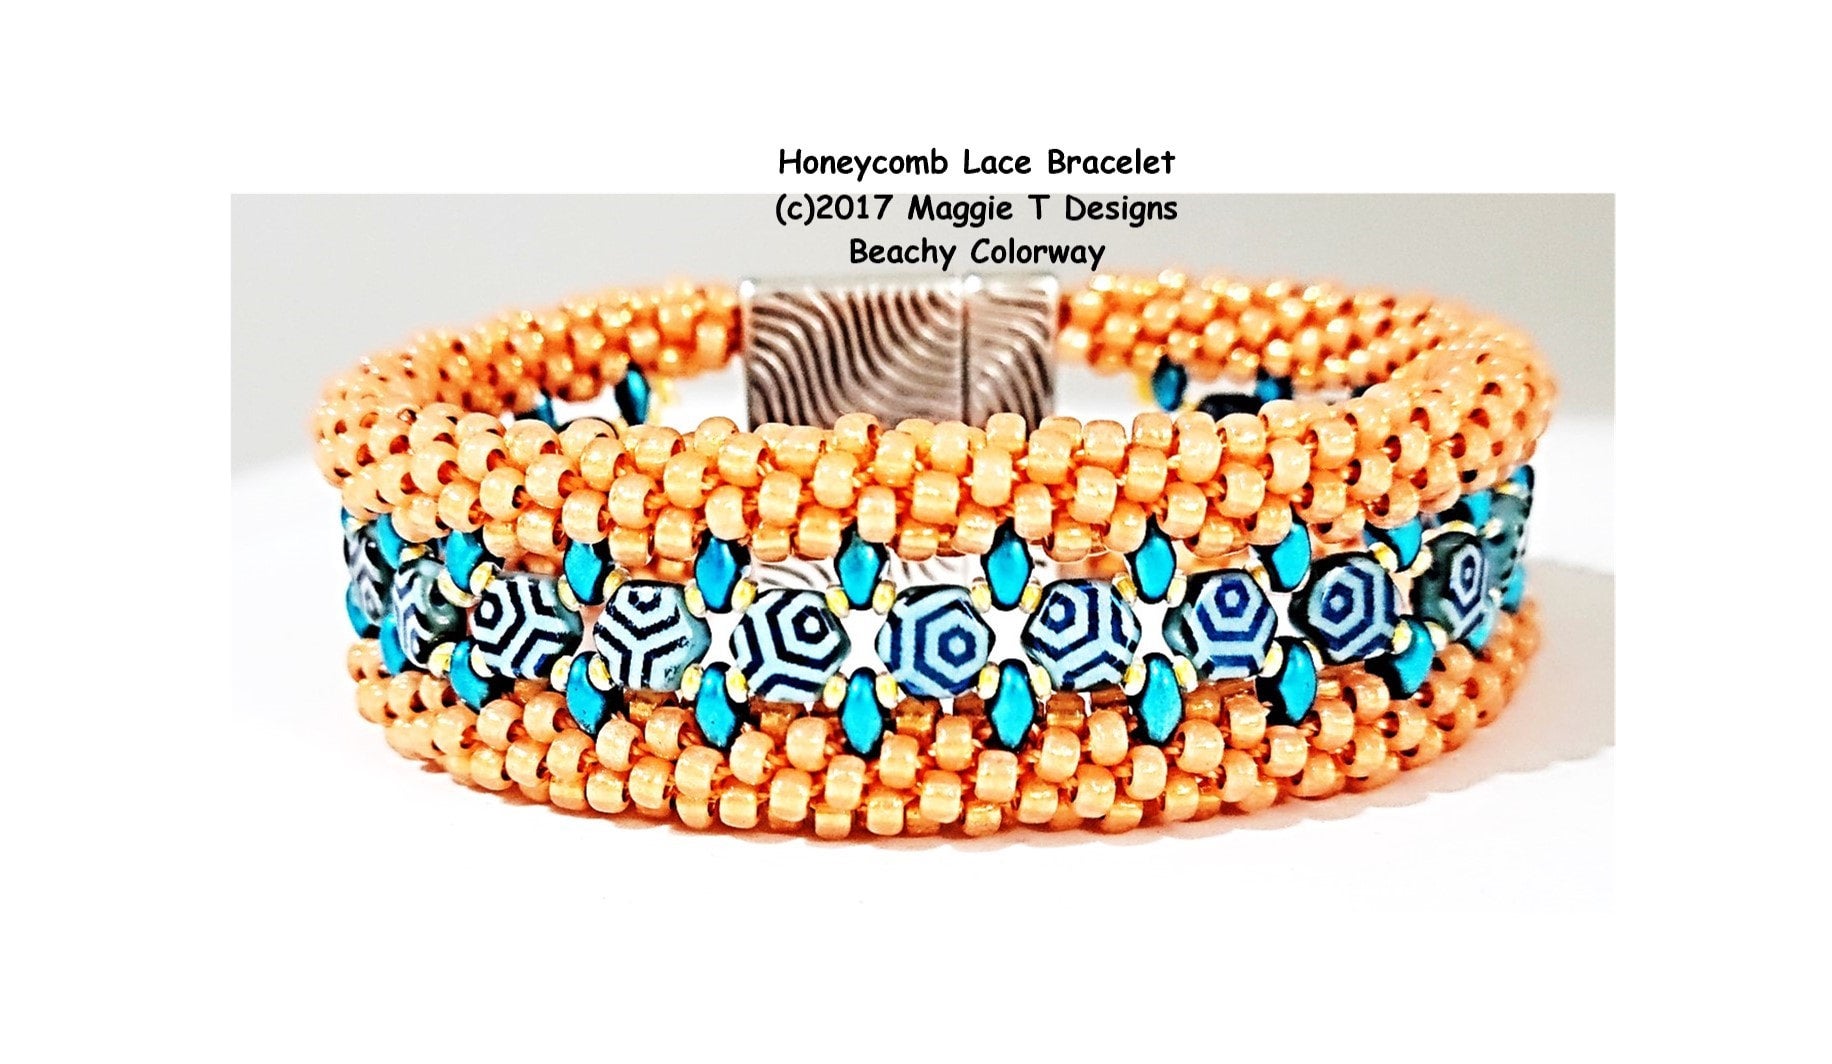 Honeycomb Lace Bracelet